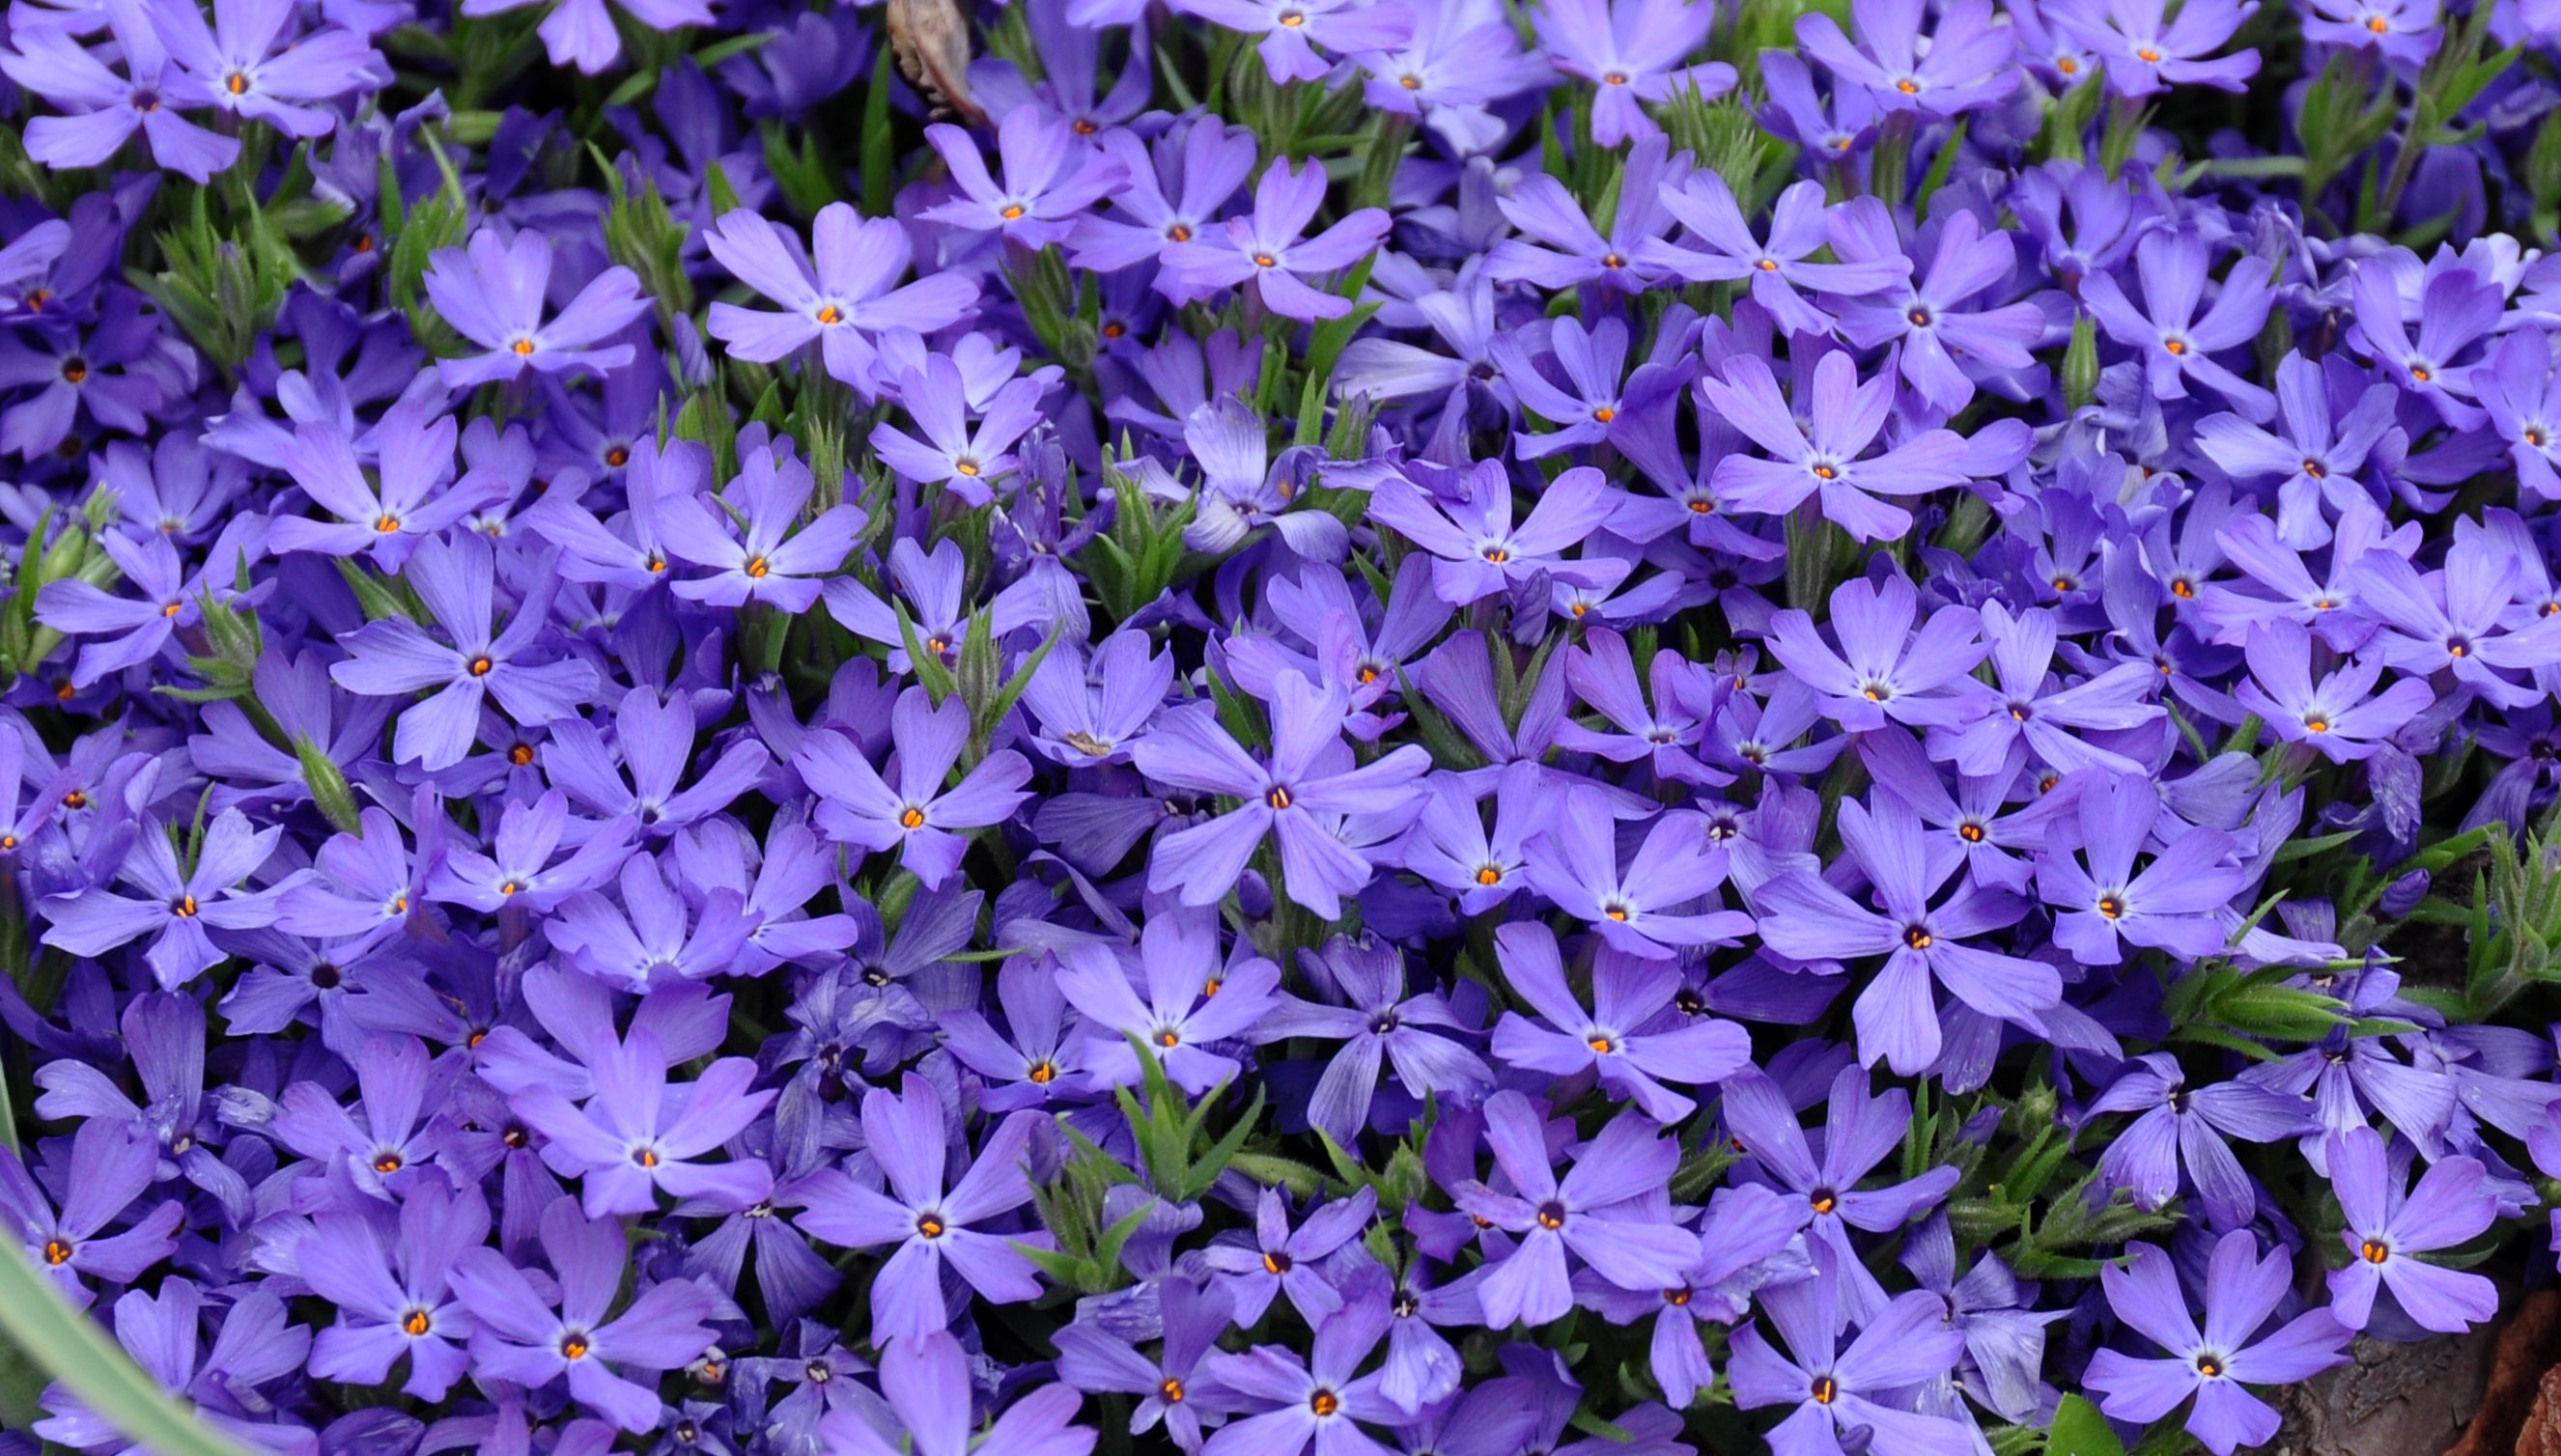 images/plants/phlox/phl-violet-pinwheels/phl-violet-pinwheels-0003.jpg